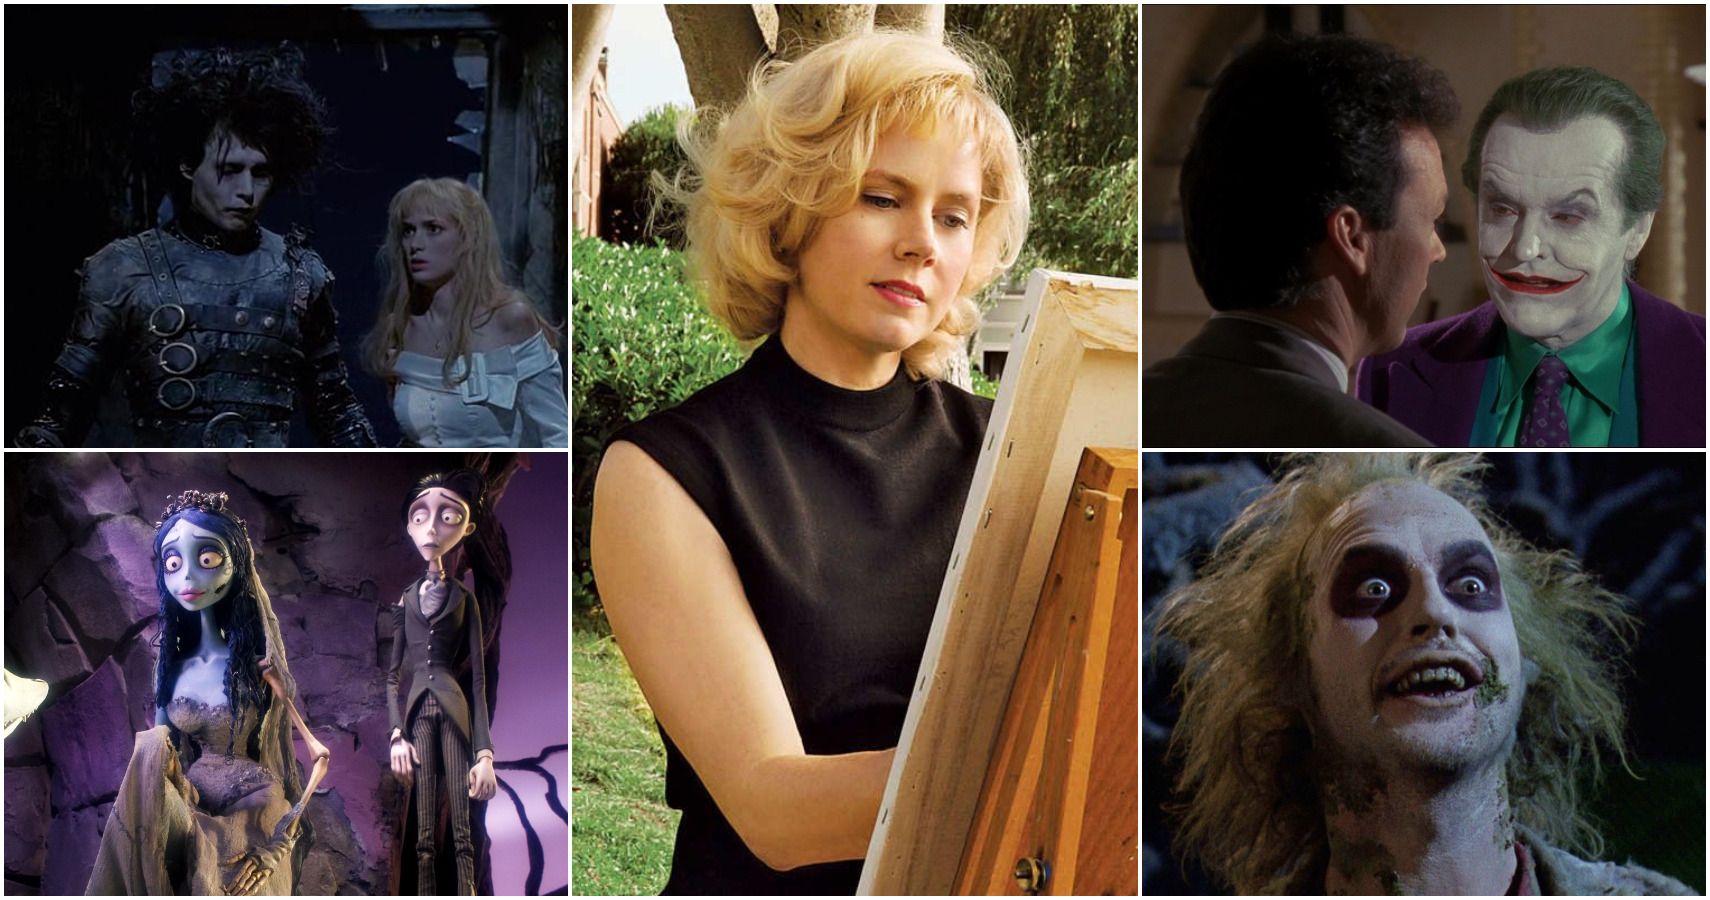 Tim Burtons 10 Best Movies (According to IMDB)